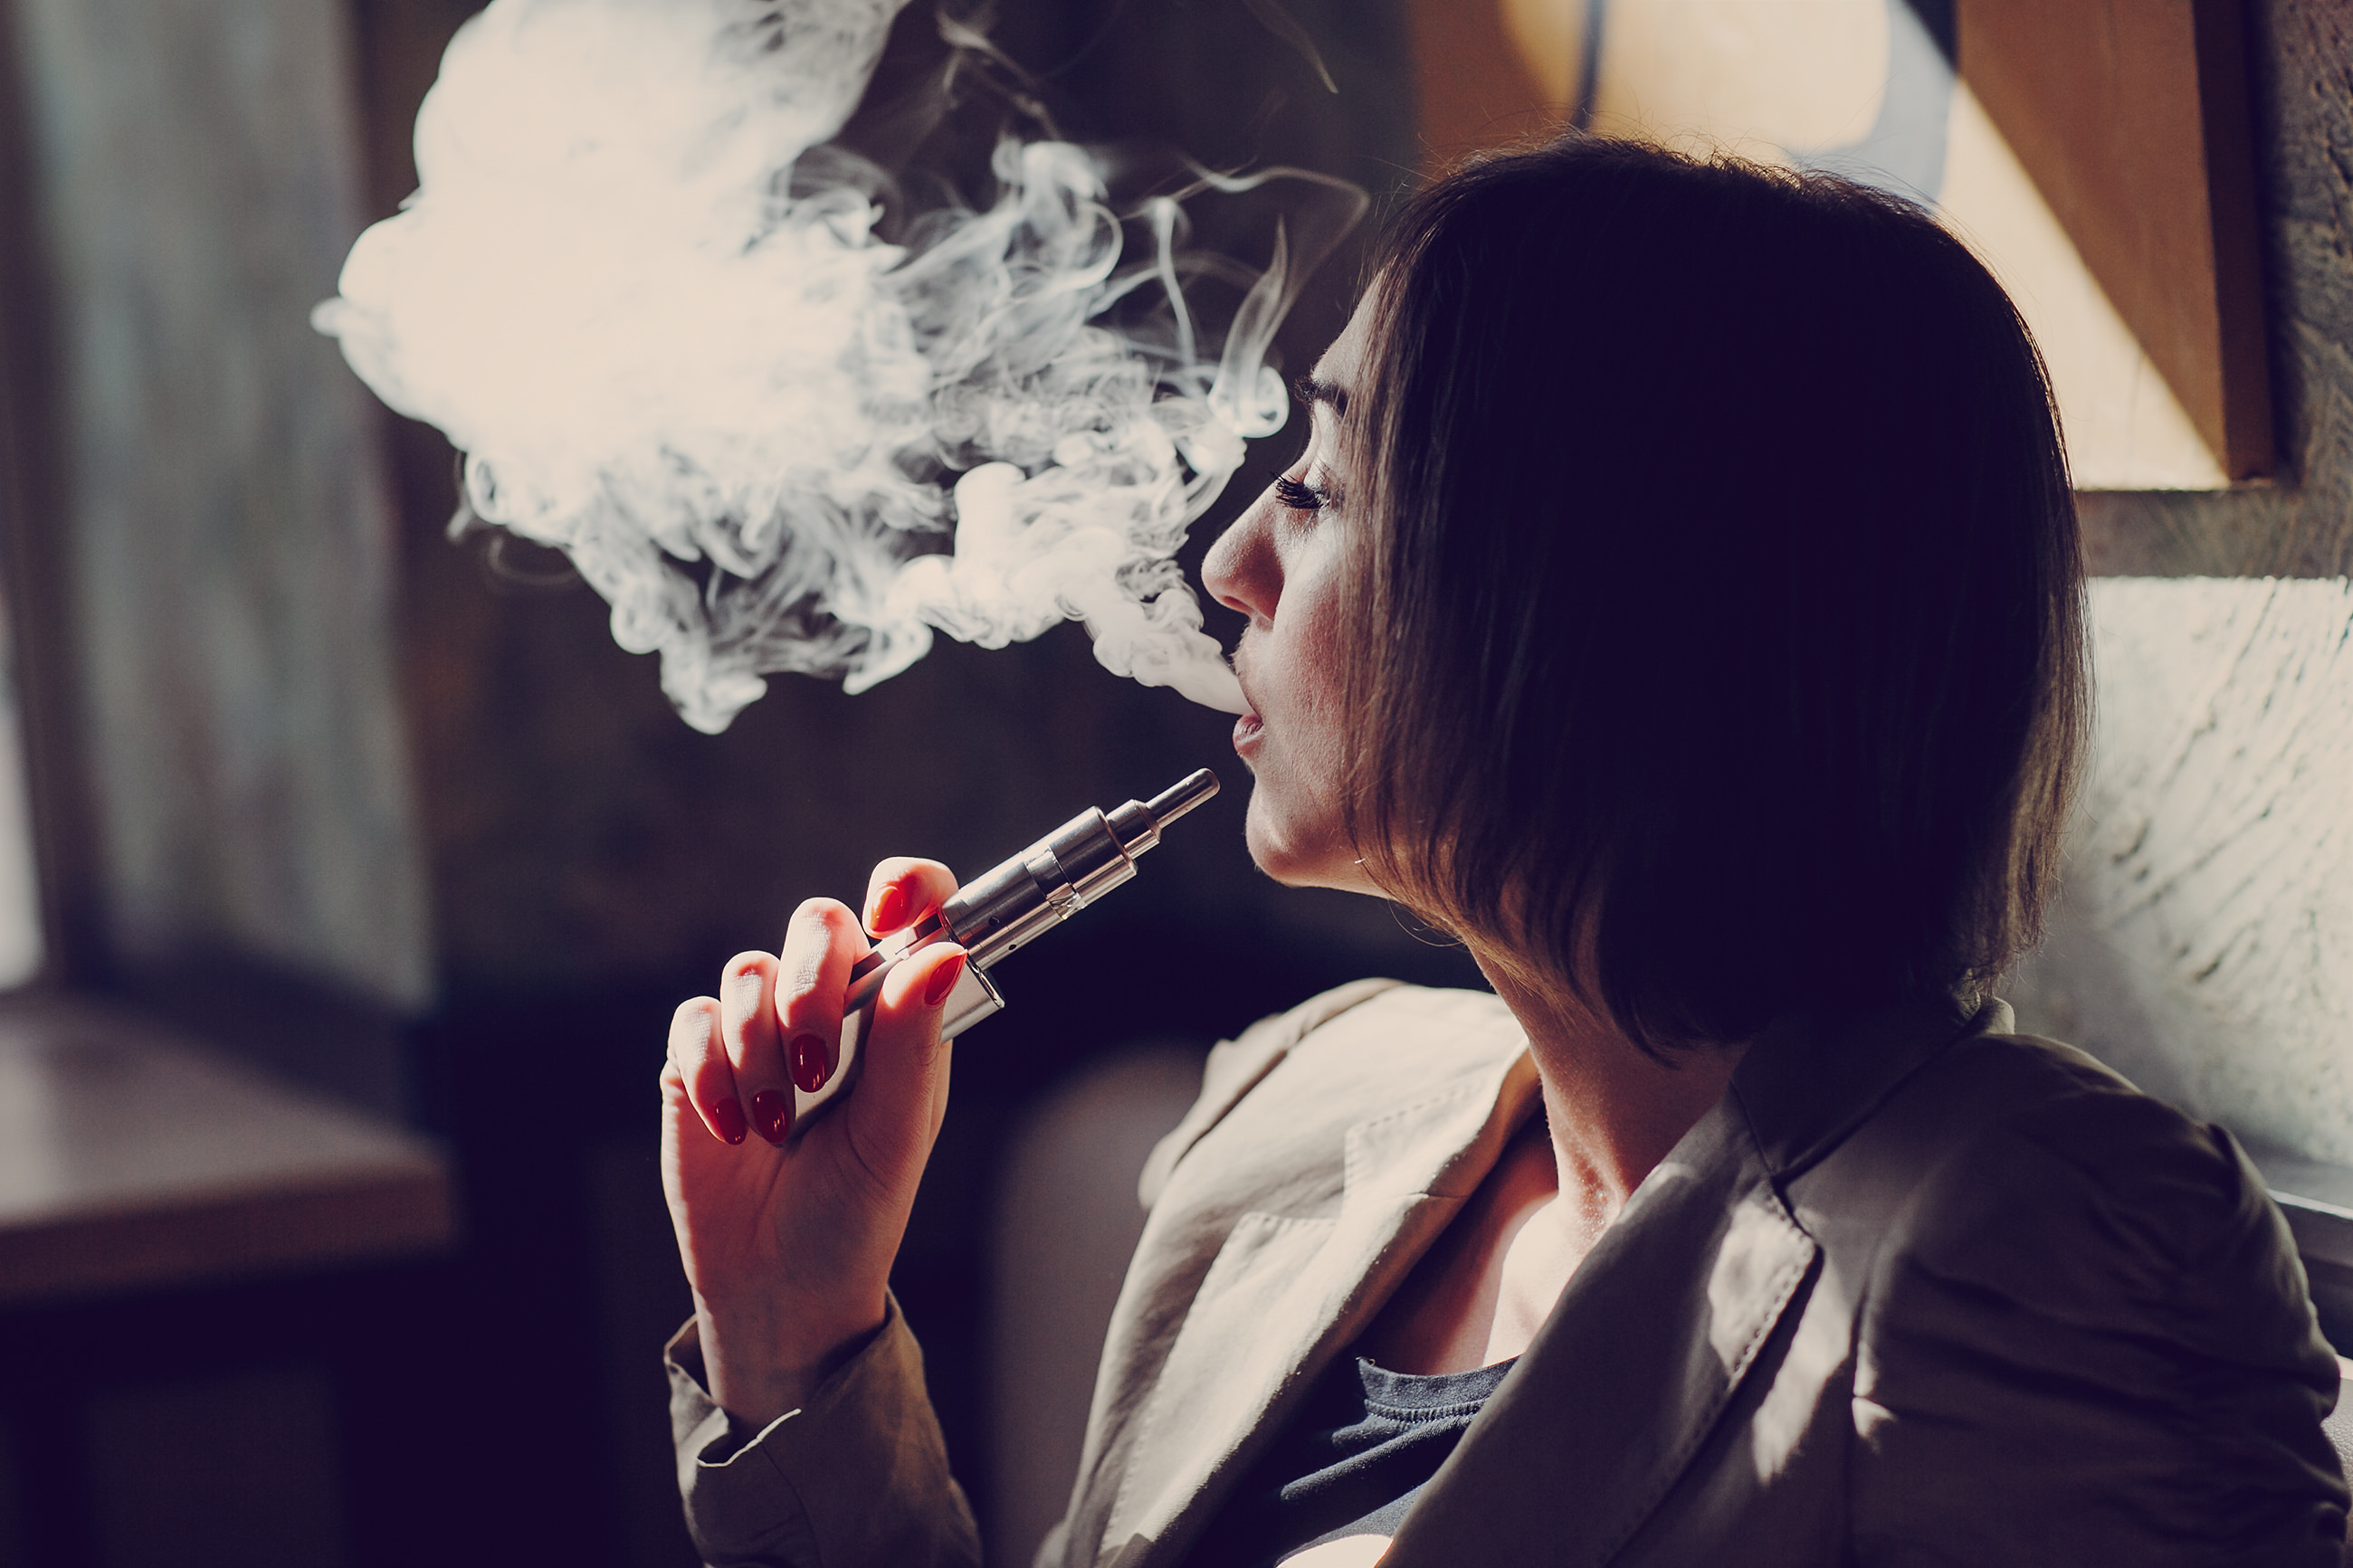 Аватарки курящие. Курящие женщины. Курящая дама. Девушка курит. Девушка курит электронную сигарету.